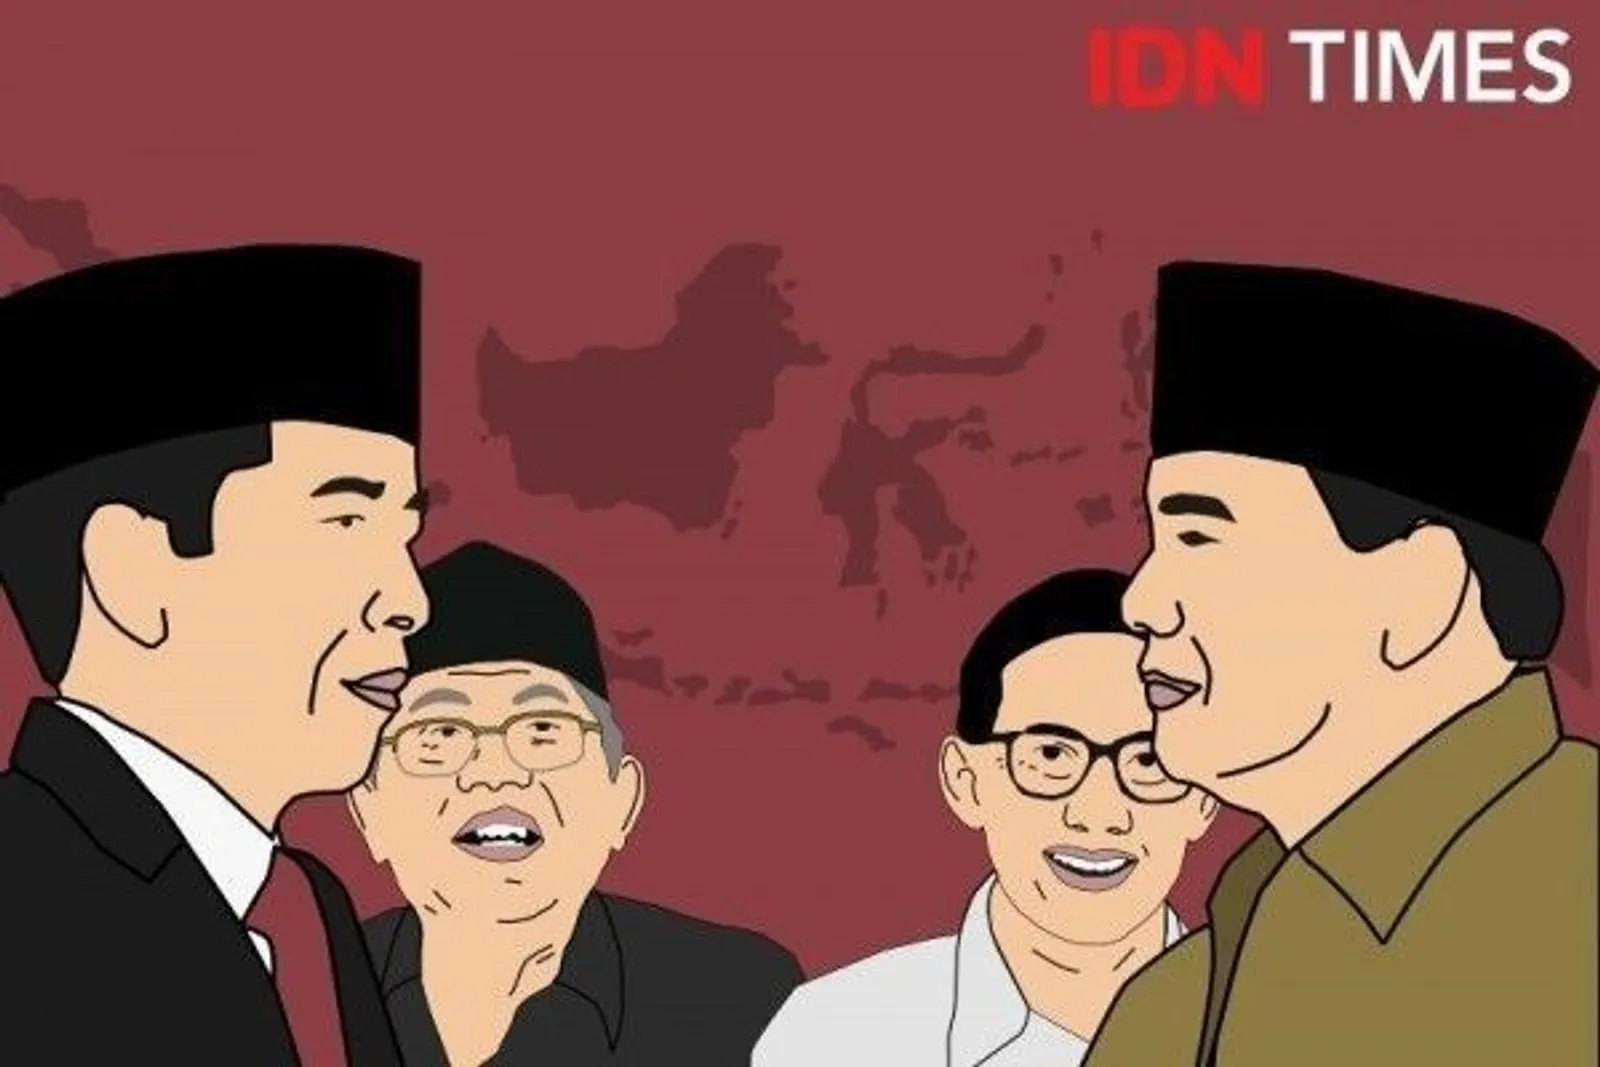 Prabowo Kritisi Kebebasan Berpendapat, Jokowi: “Jangan Grasak Grusuk”